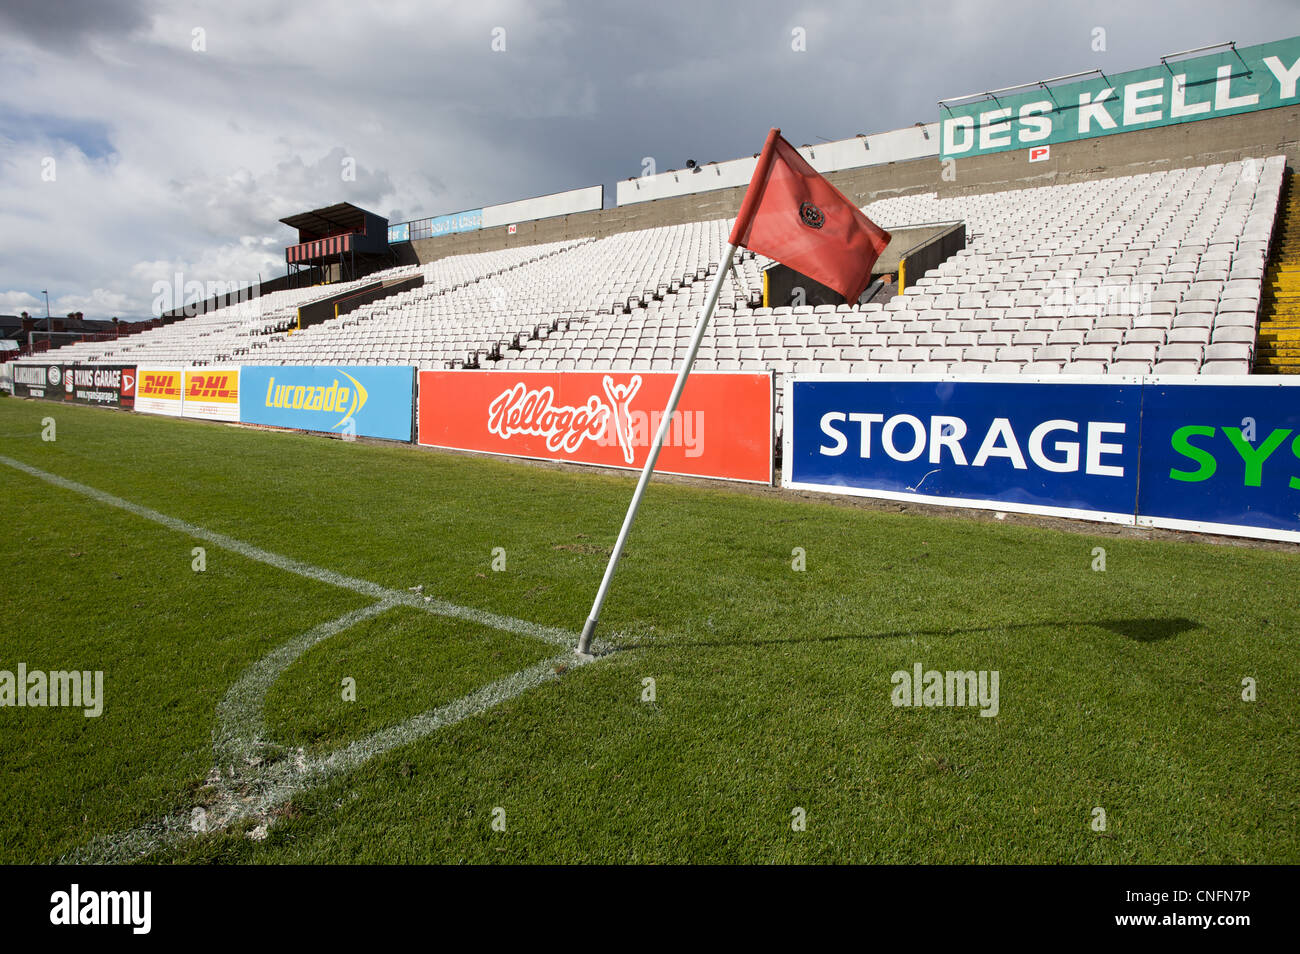 The corner flag at Dalymount Park football stadium in Dublin, Ireland. Stock Photo